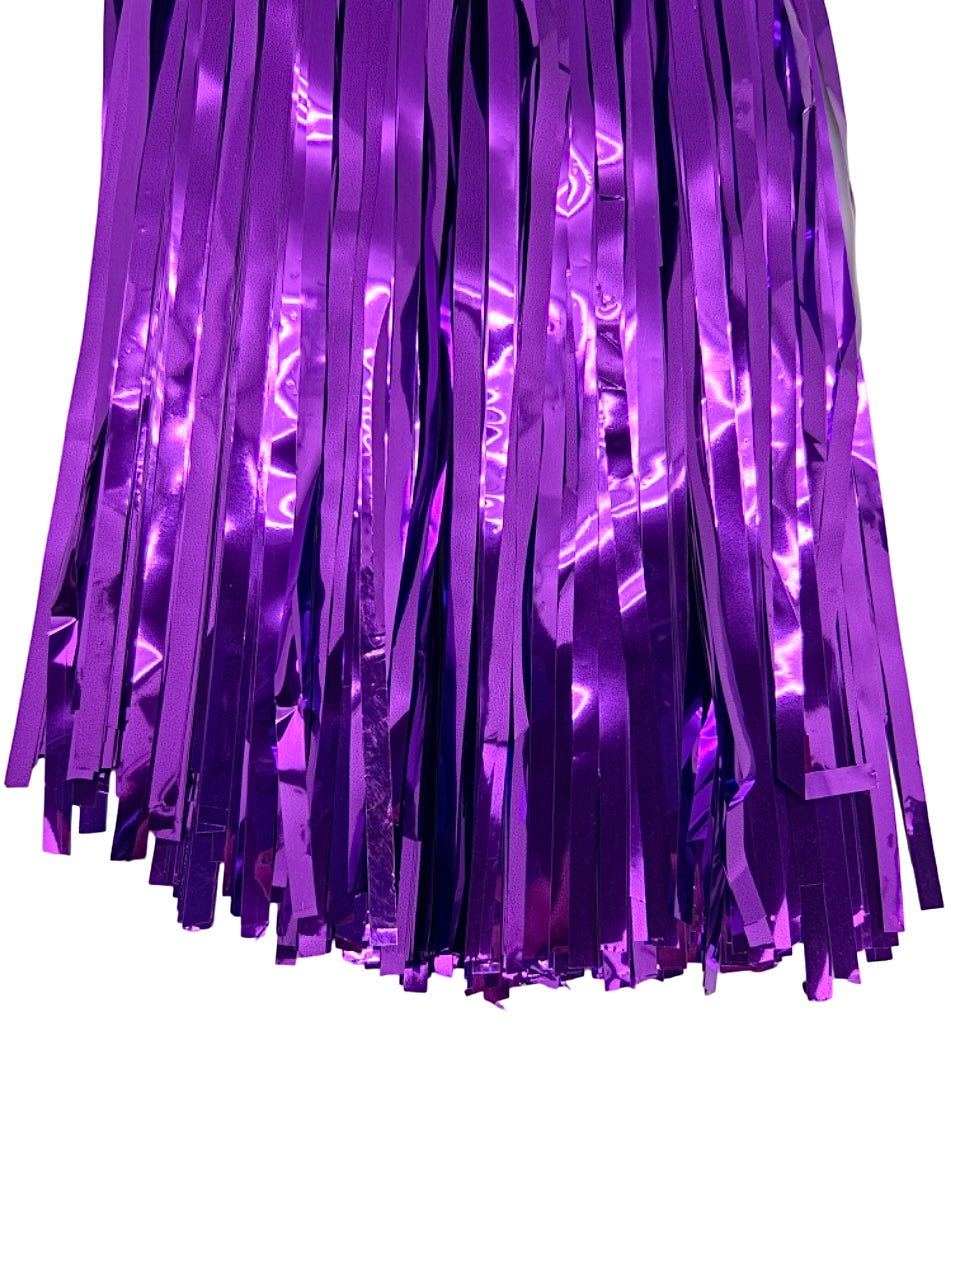 15" x 10' Purple Fringe